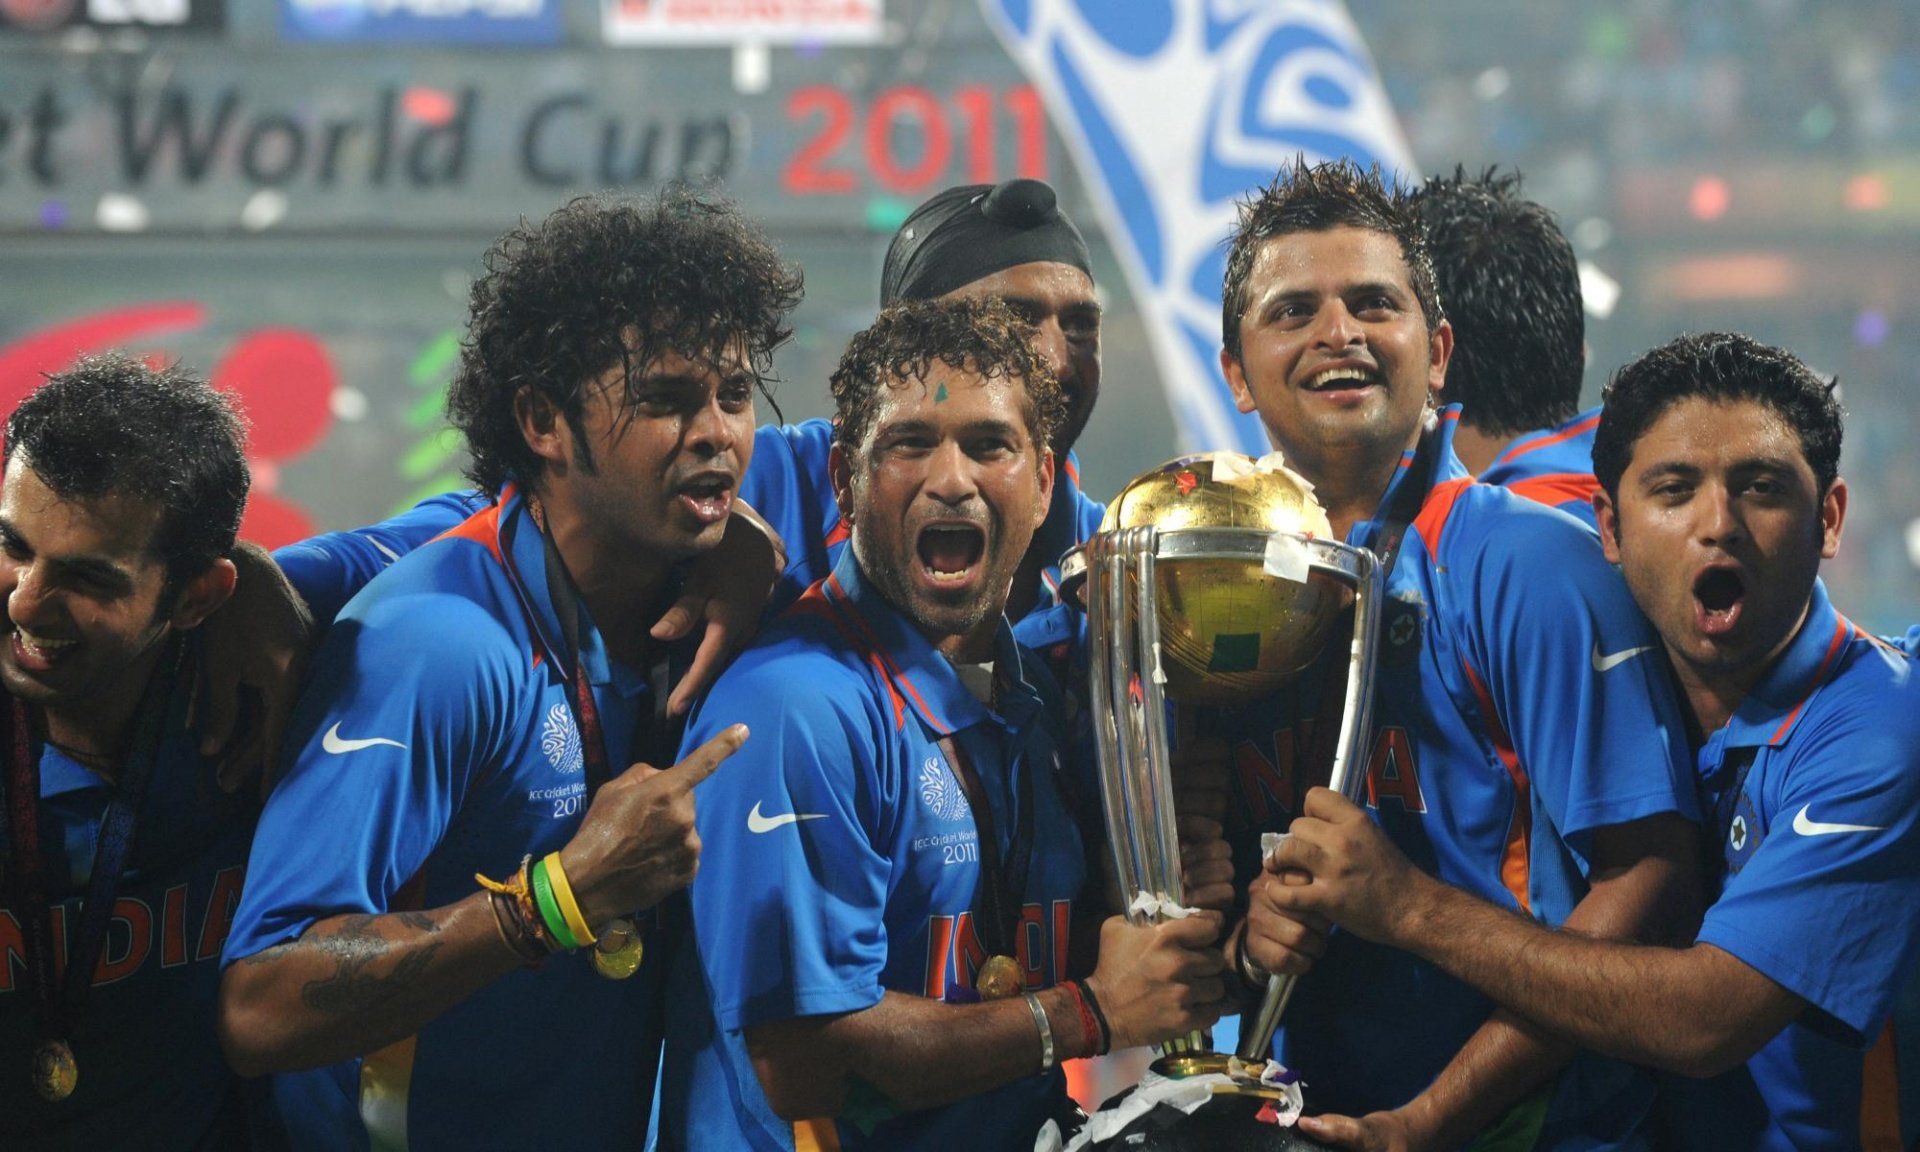 Cricket icons Shane Warne and Sachin Tendulkar 'planning new T20 league' 